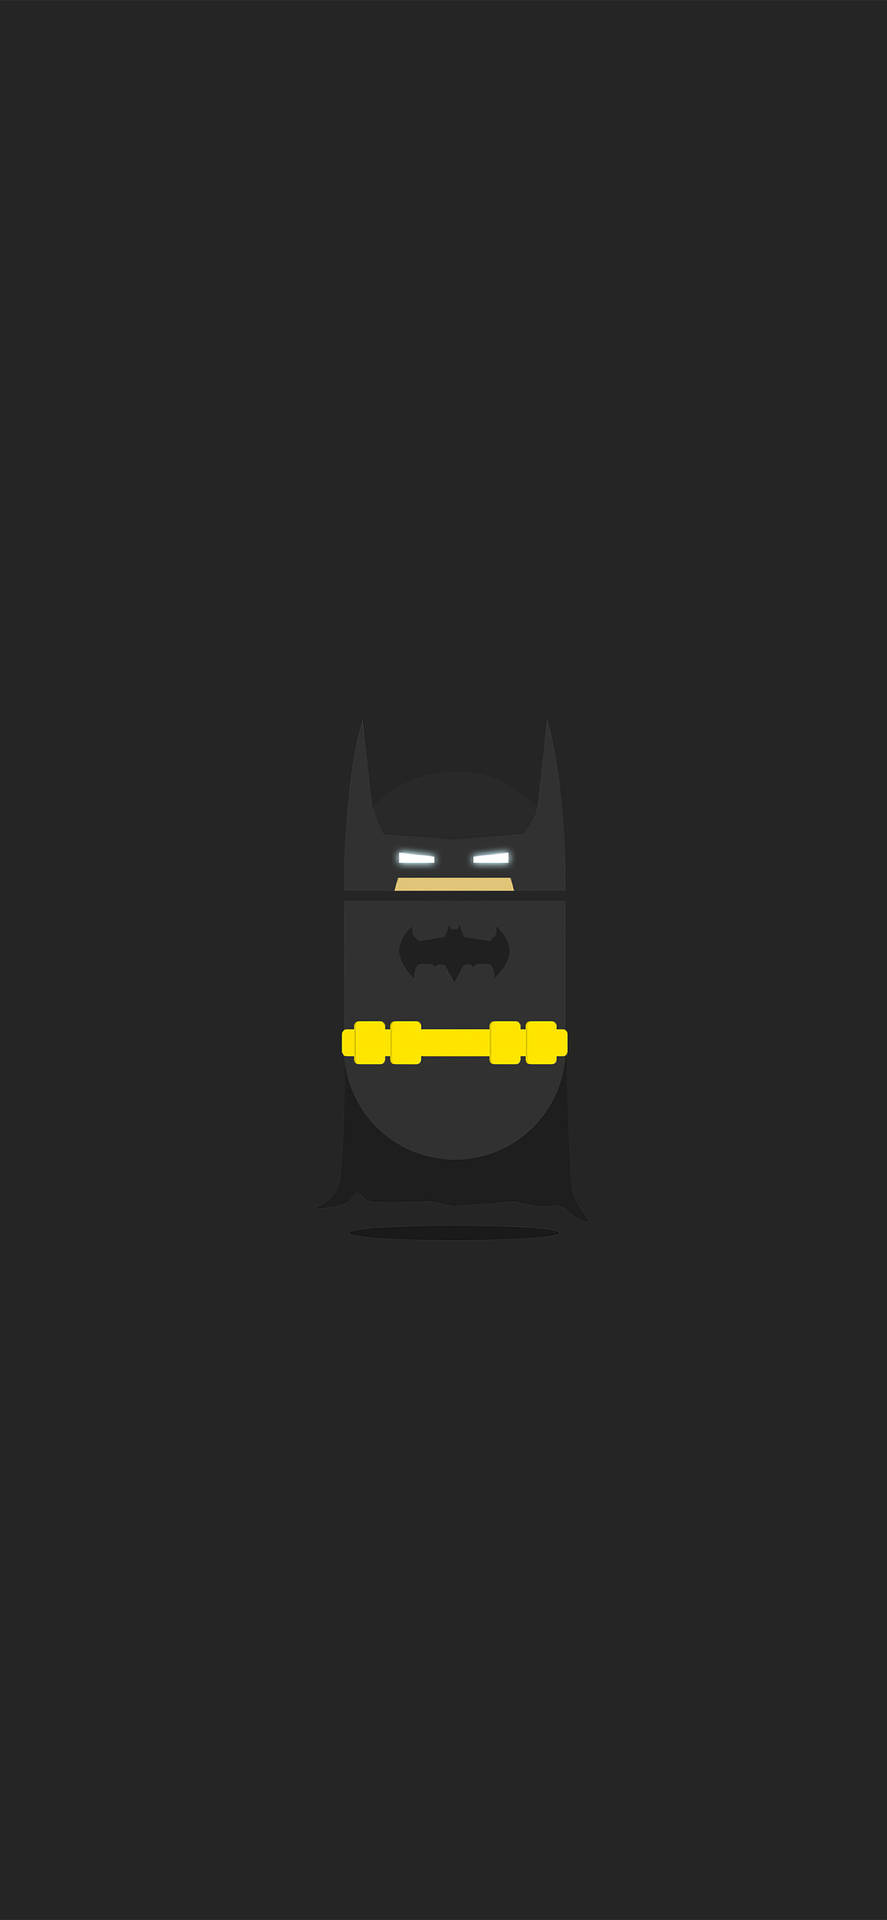 Lego Batman Minimal Dark Iphone Background